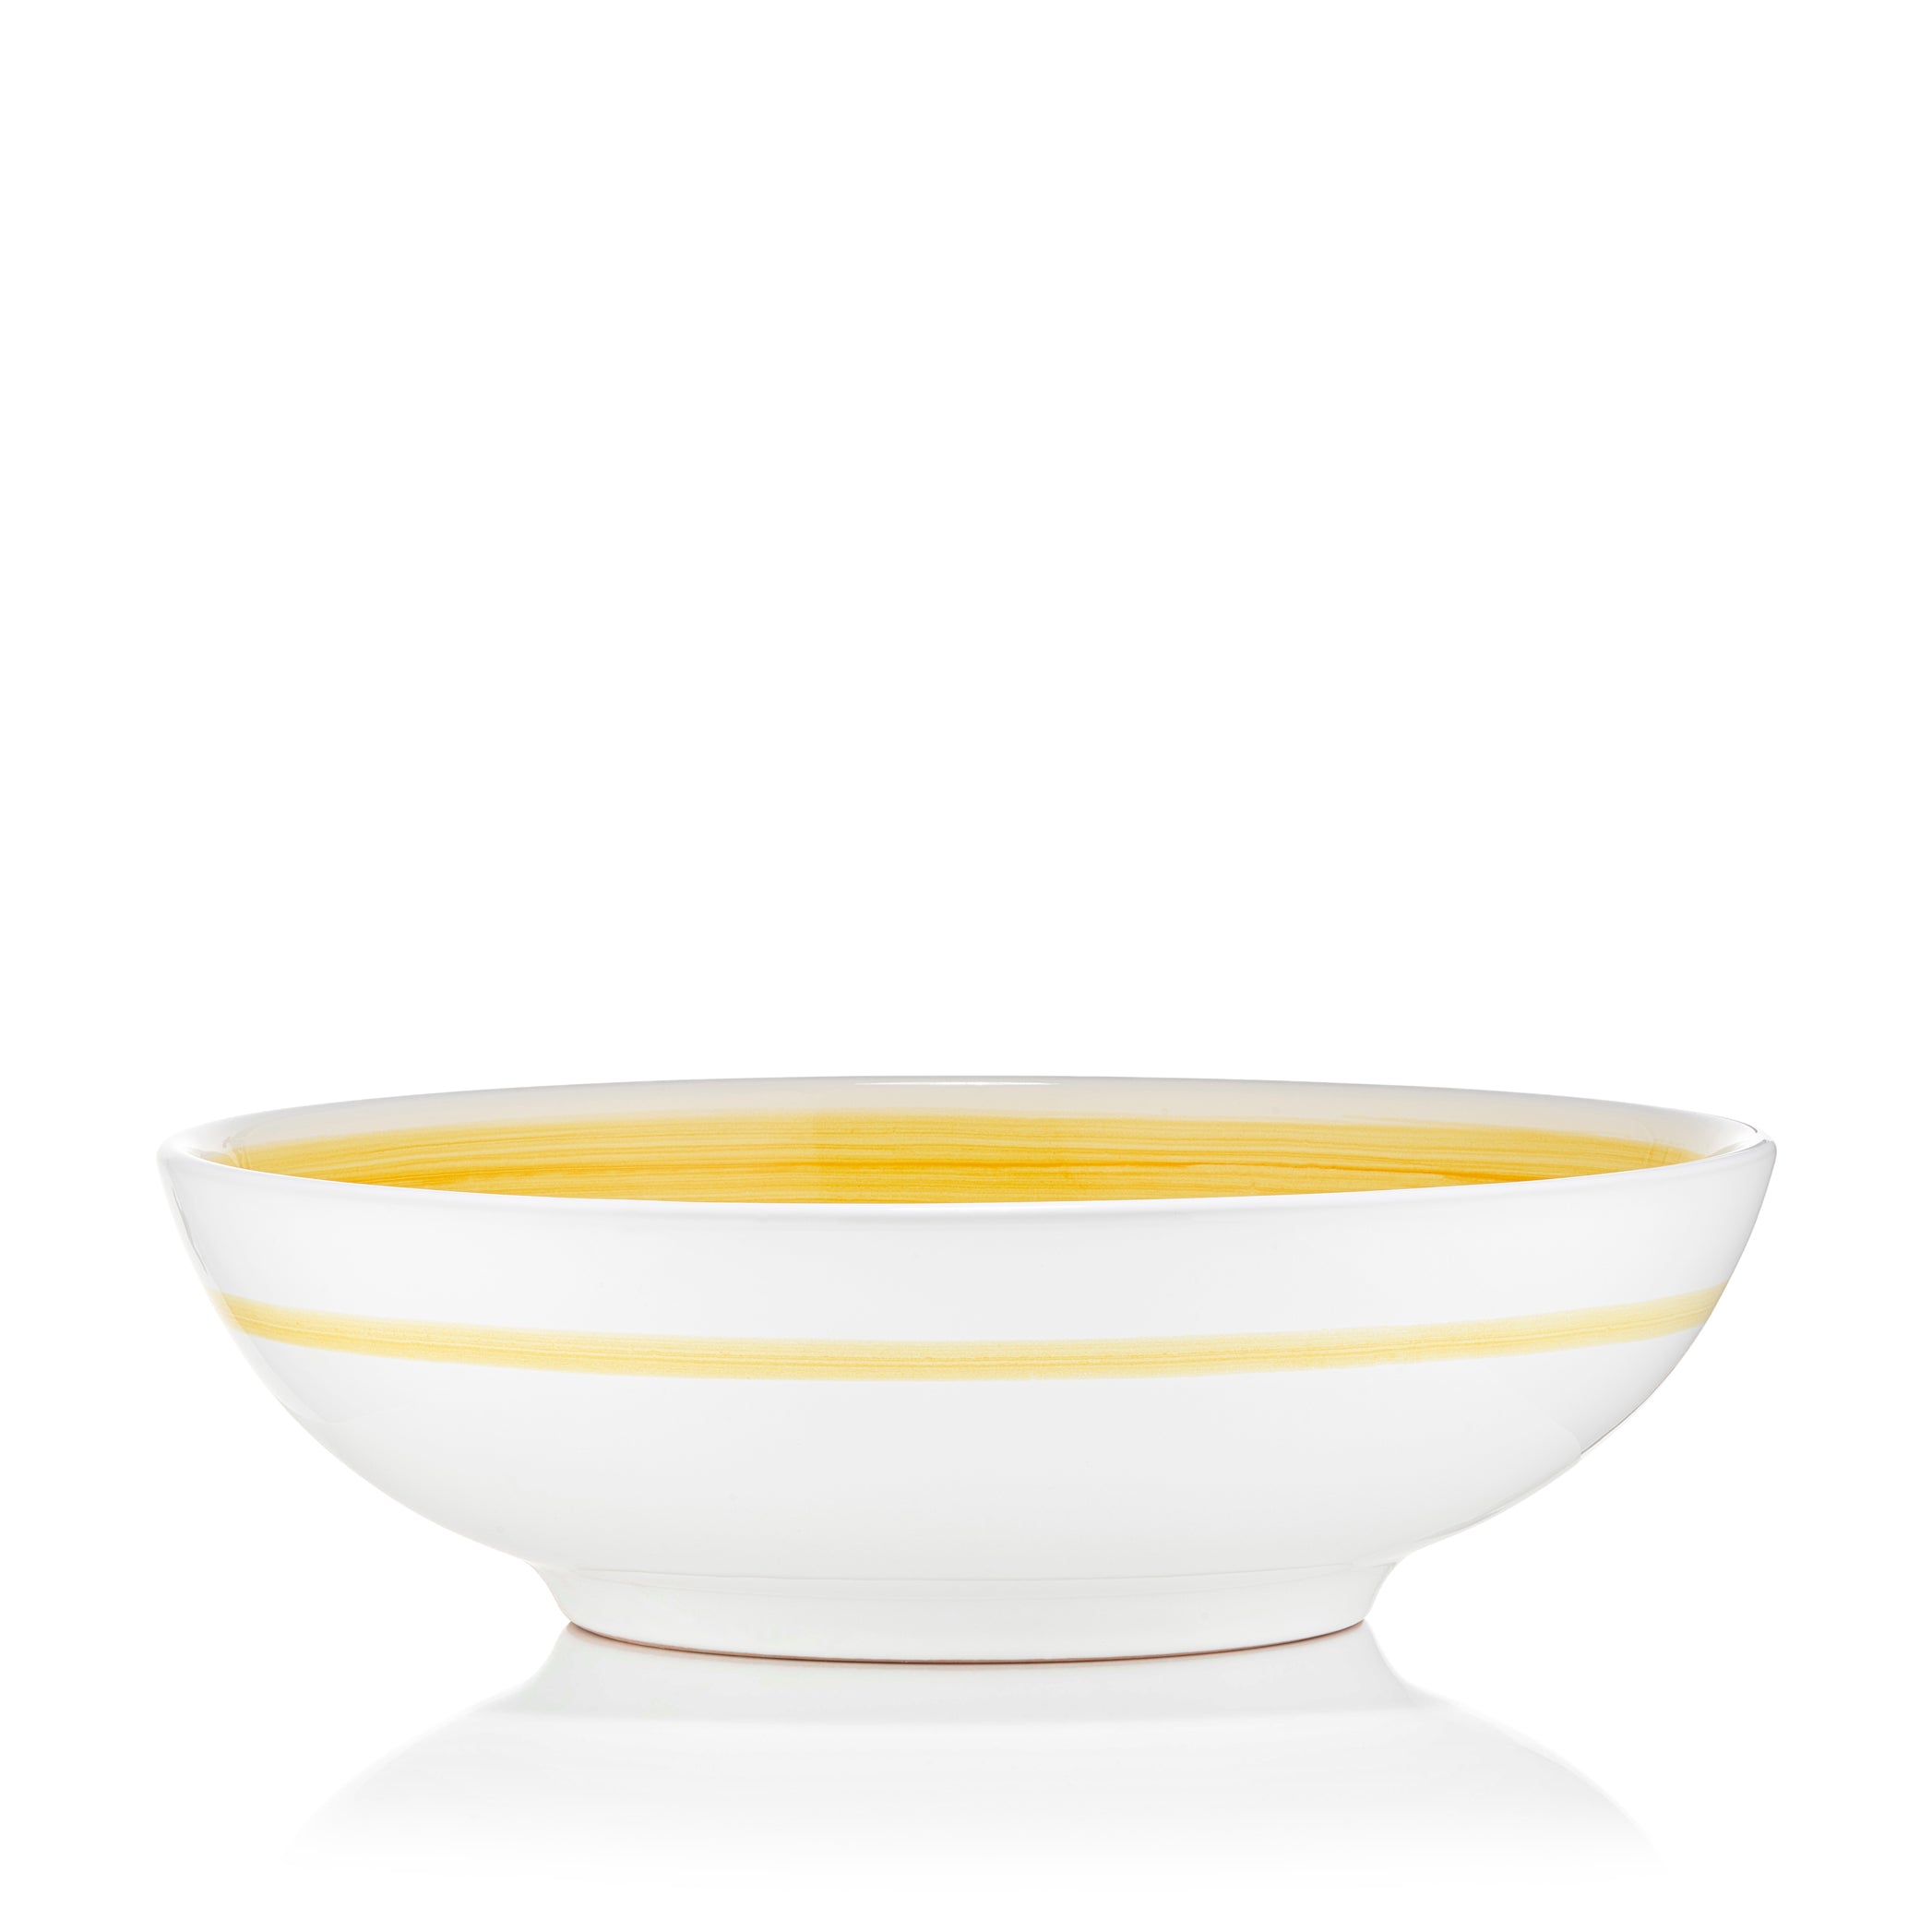 S&B 'Brushed' Ceramic Serving Bowl in Yellow, 30cm